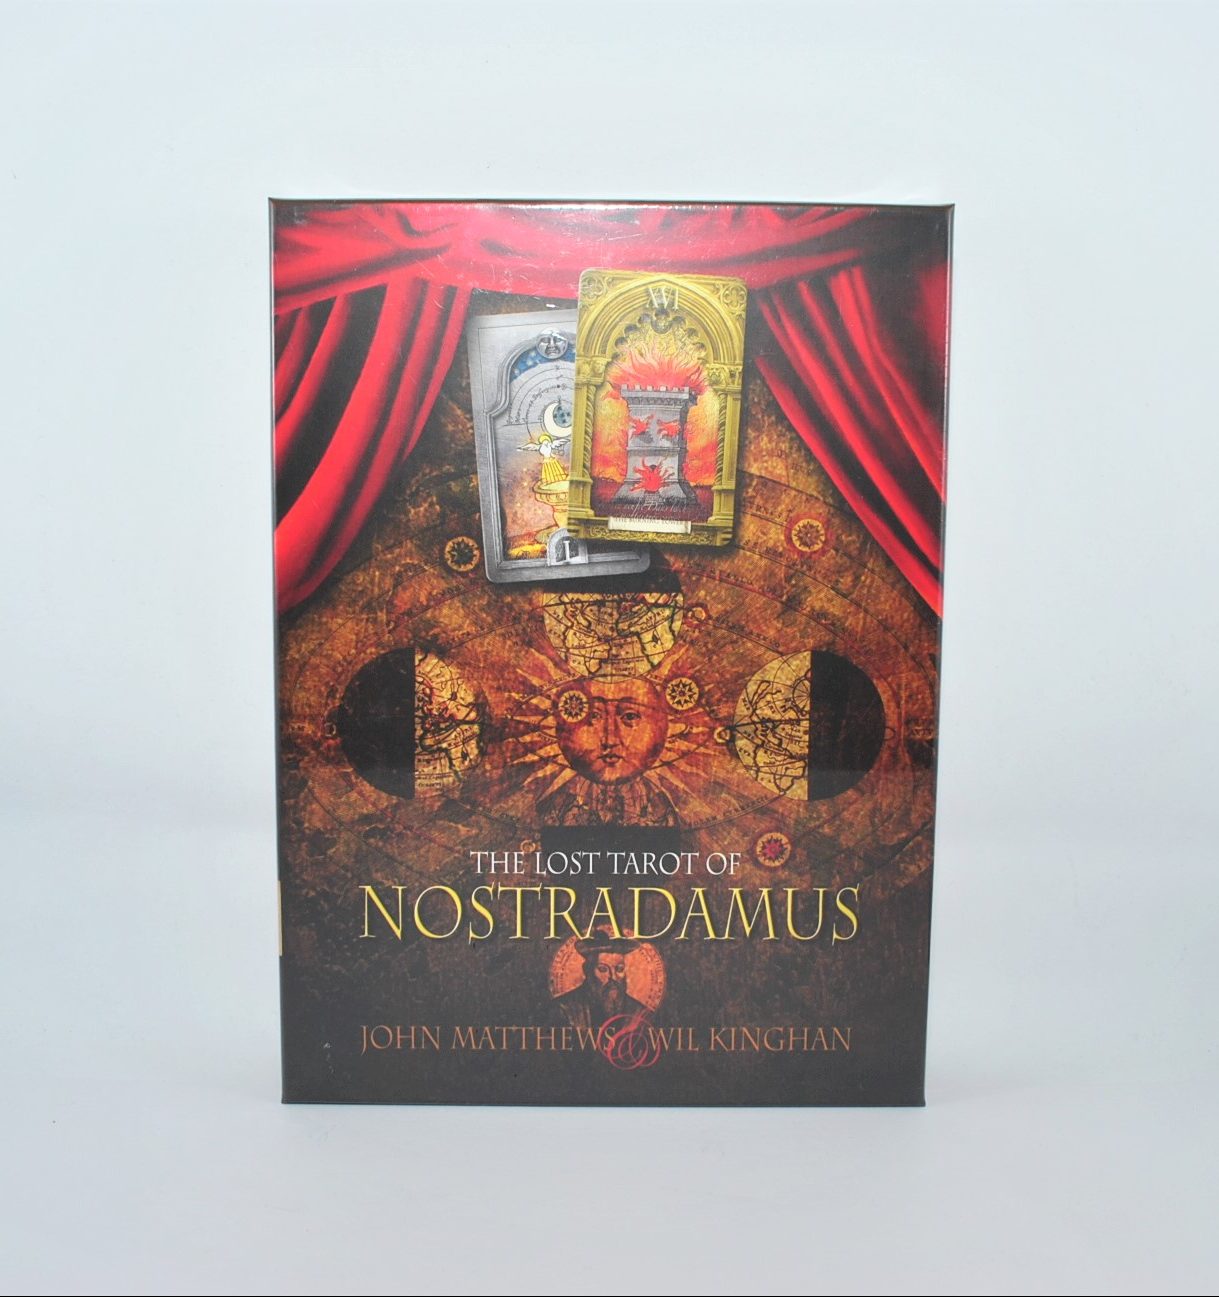 The Lost Tarot of Nostradamus - 2012 edition